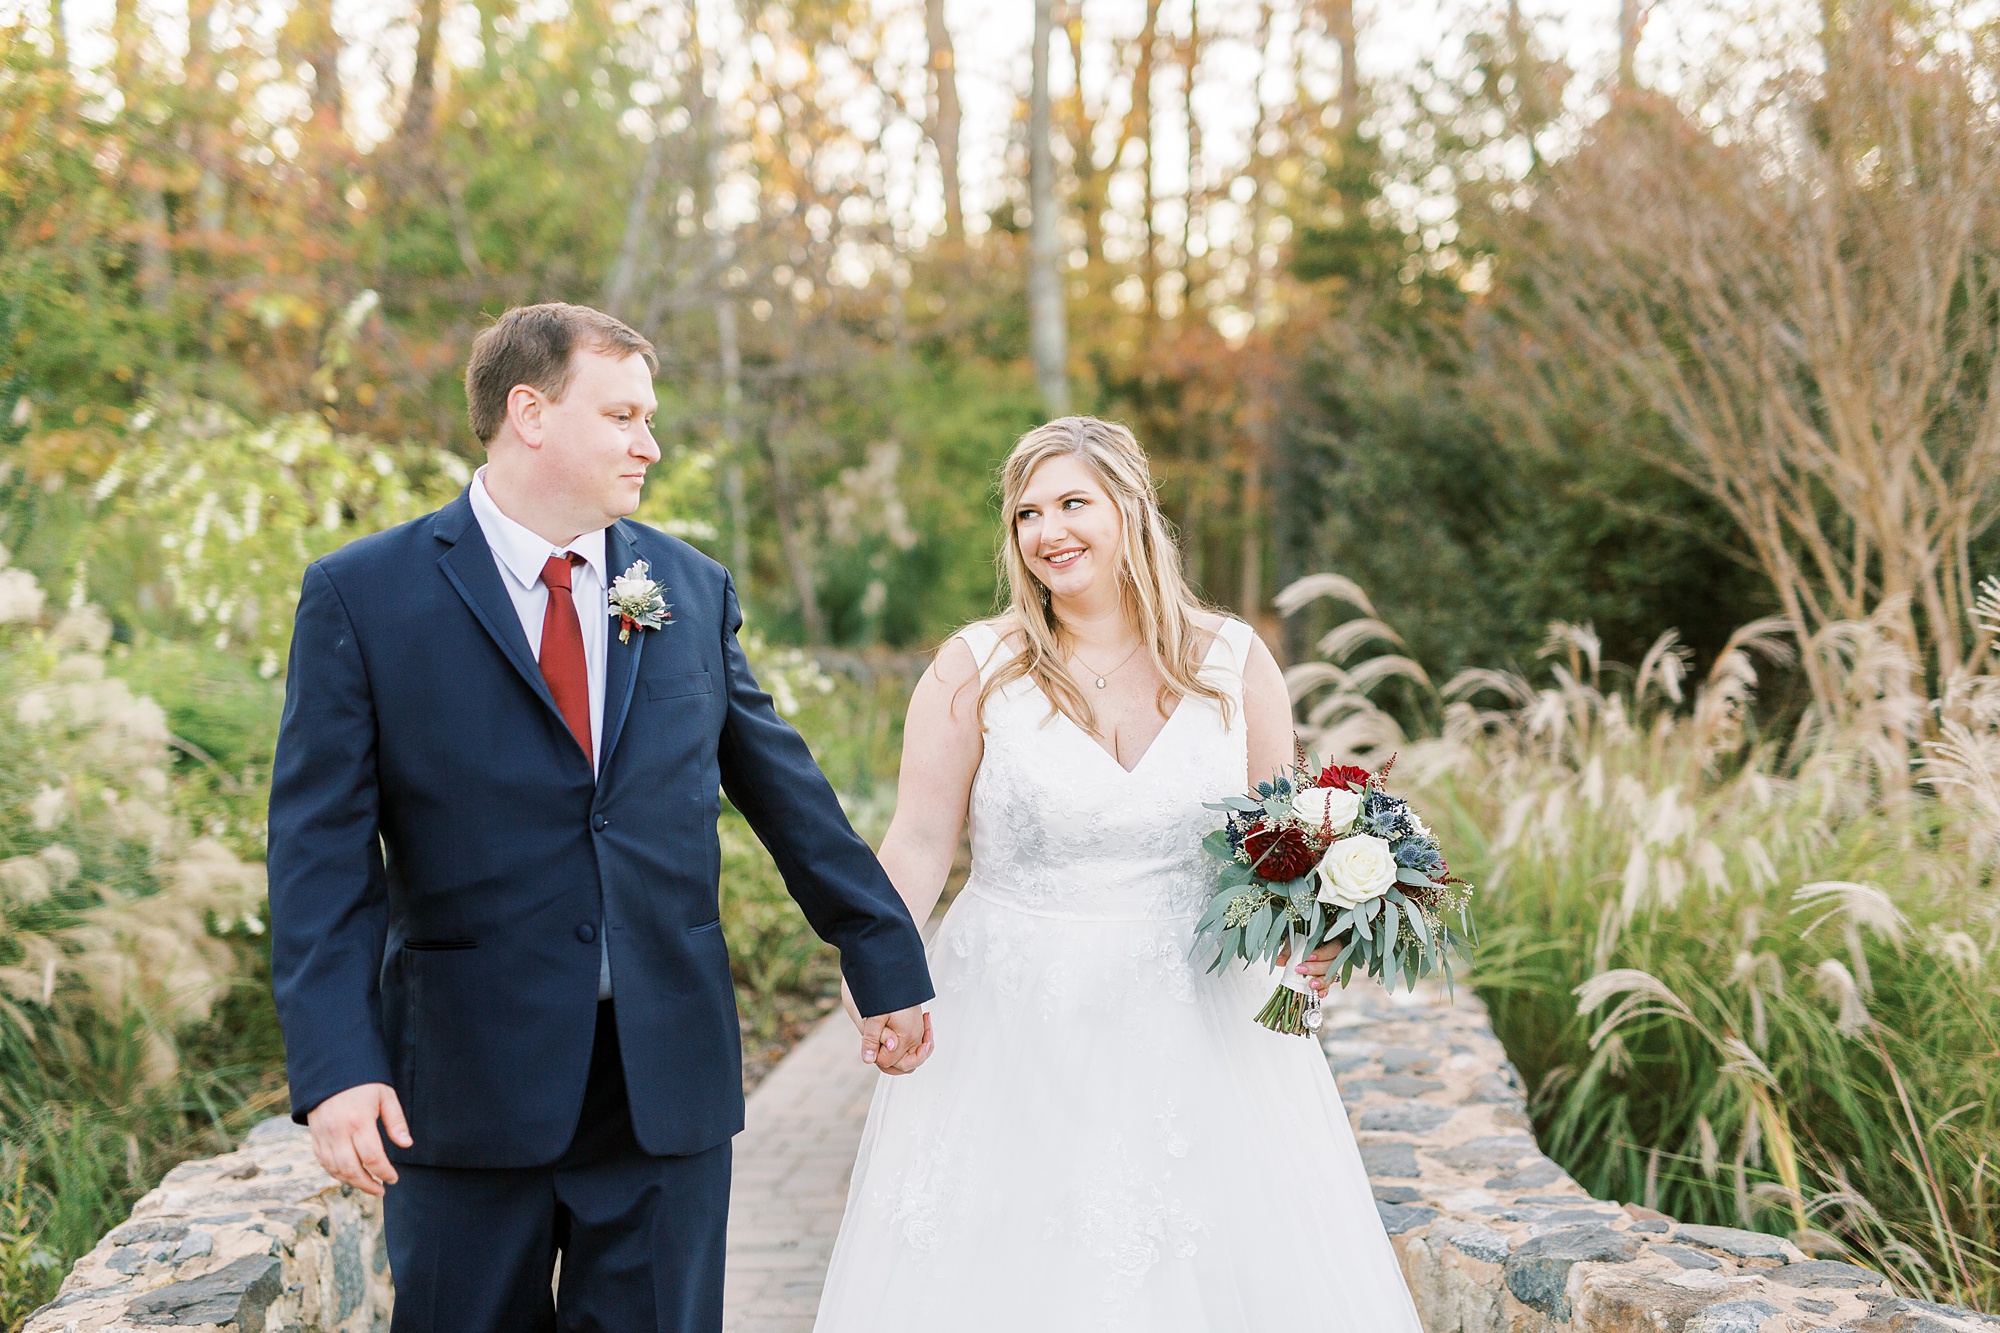 newlyweds walk through the Arbors Events gardens